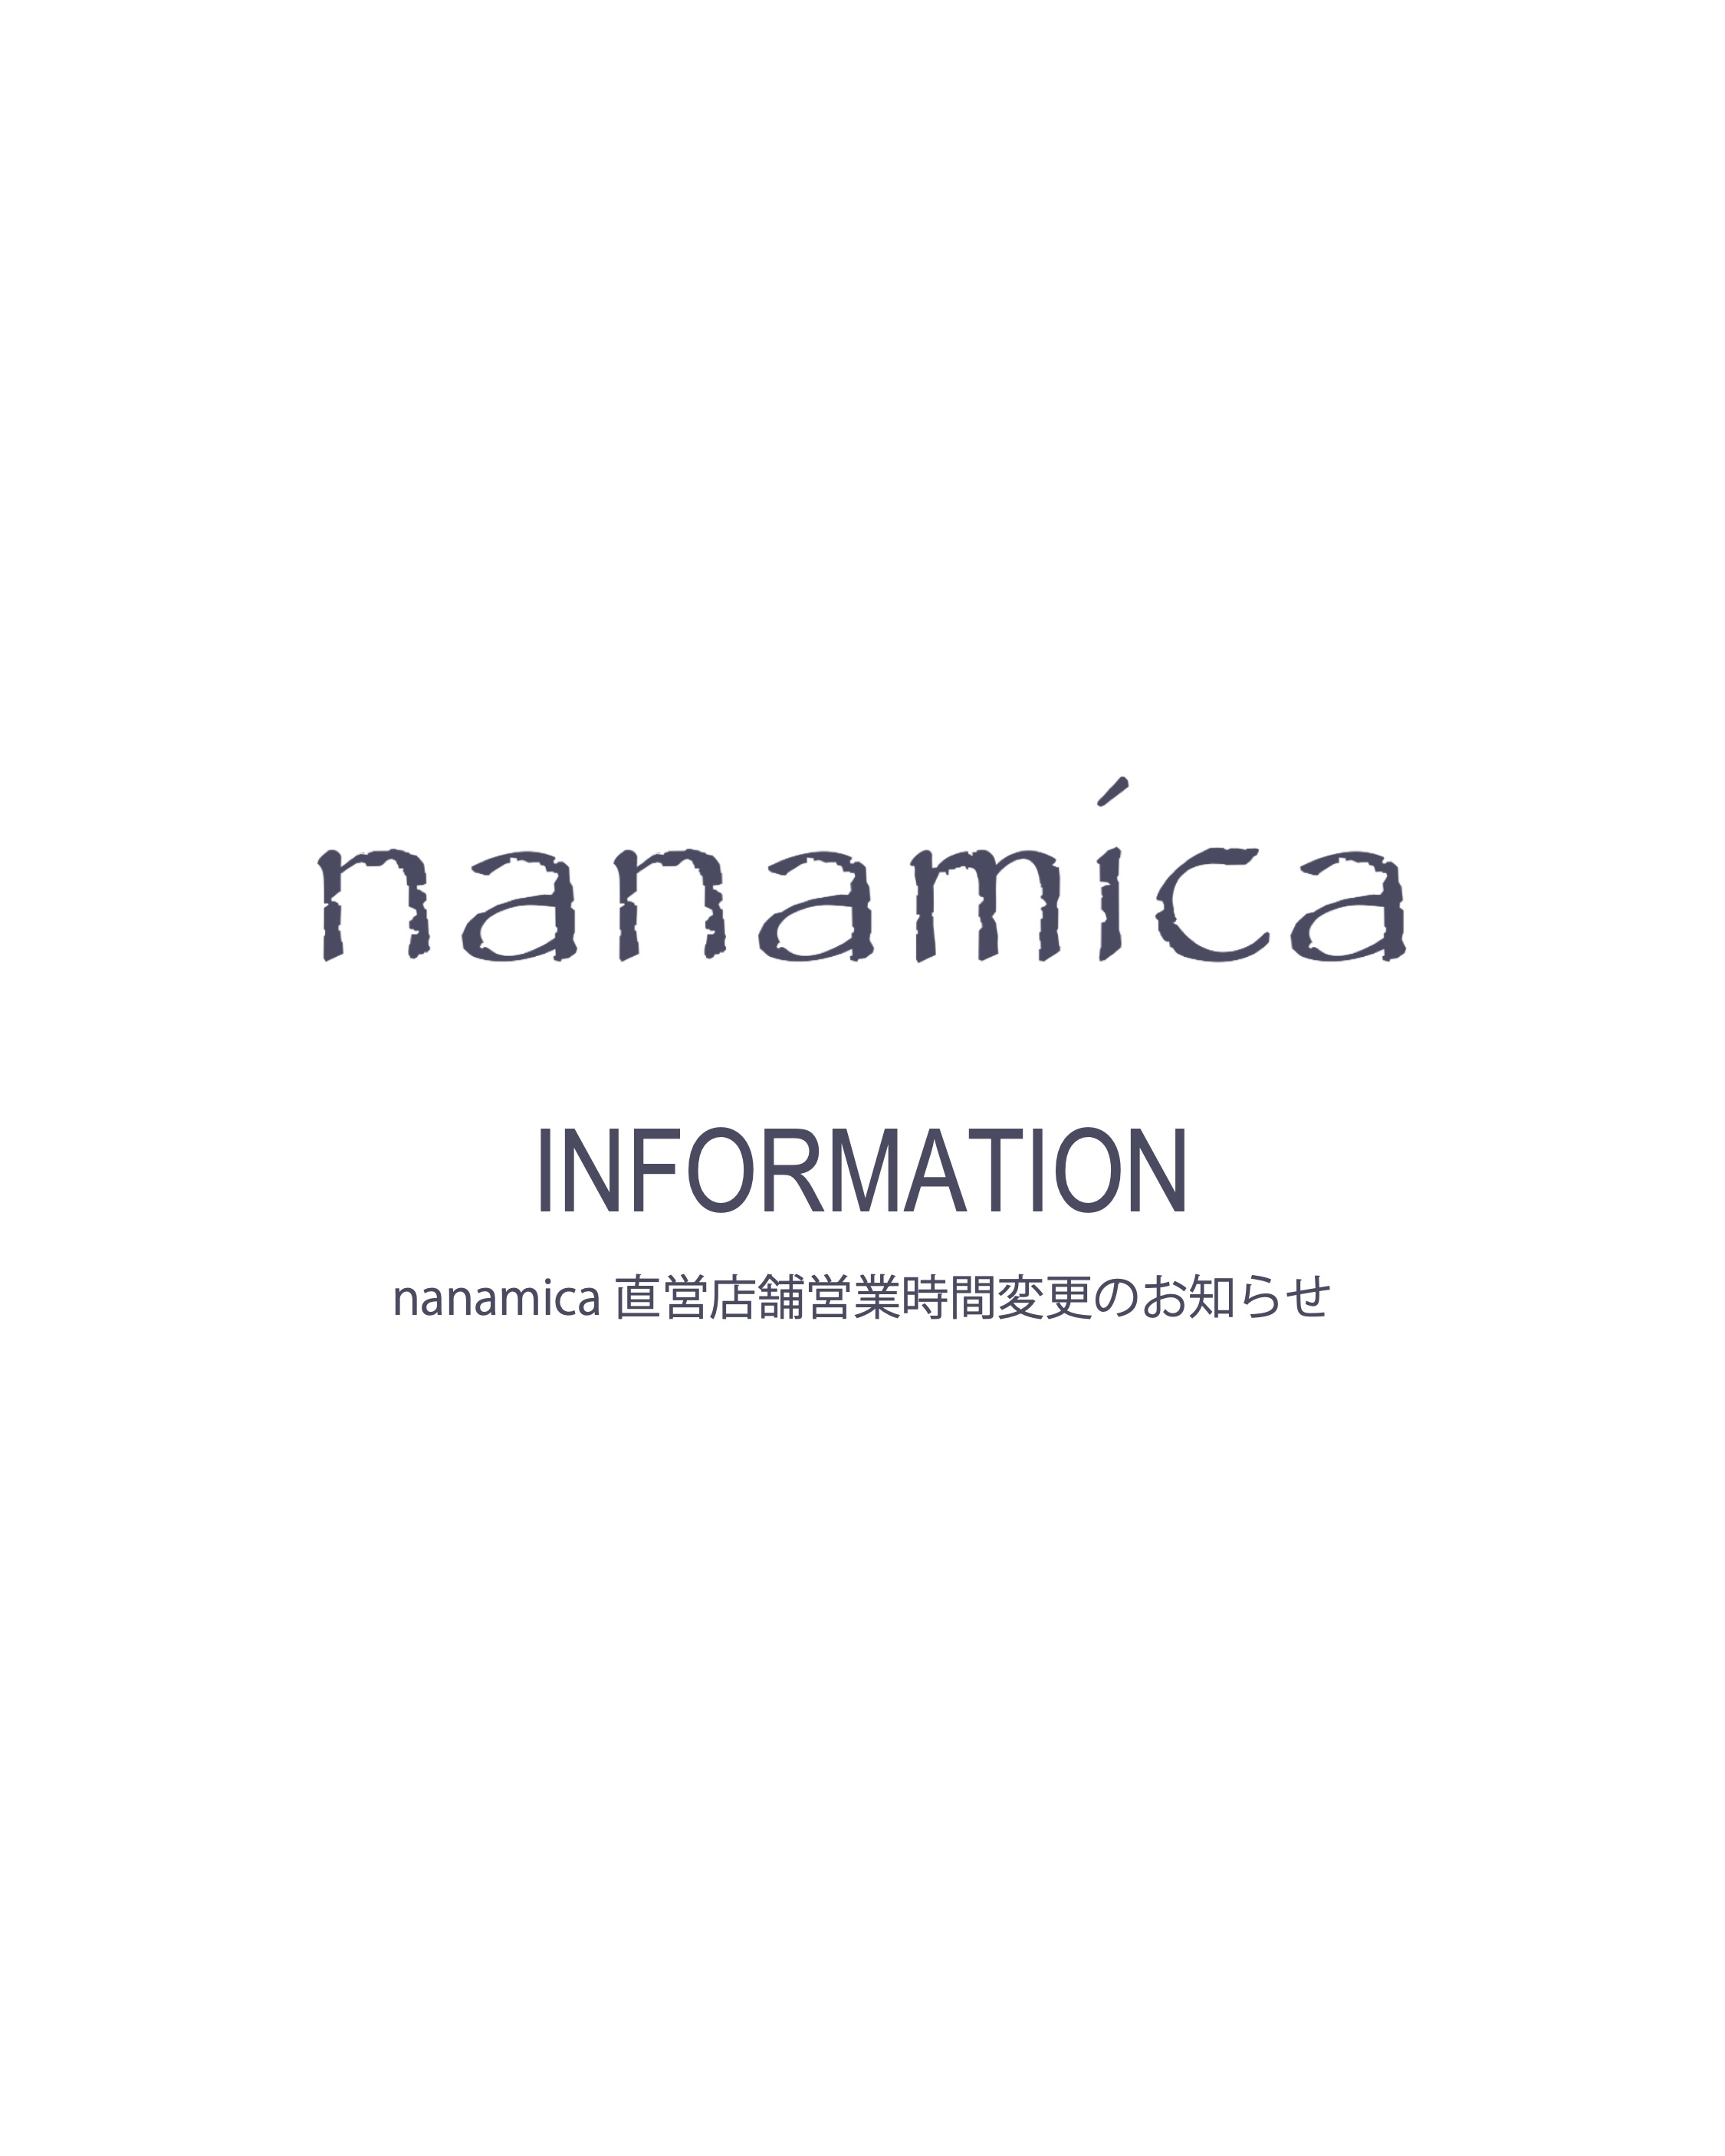 nanamica直営店舗営業時間変更のお知らせ